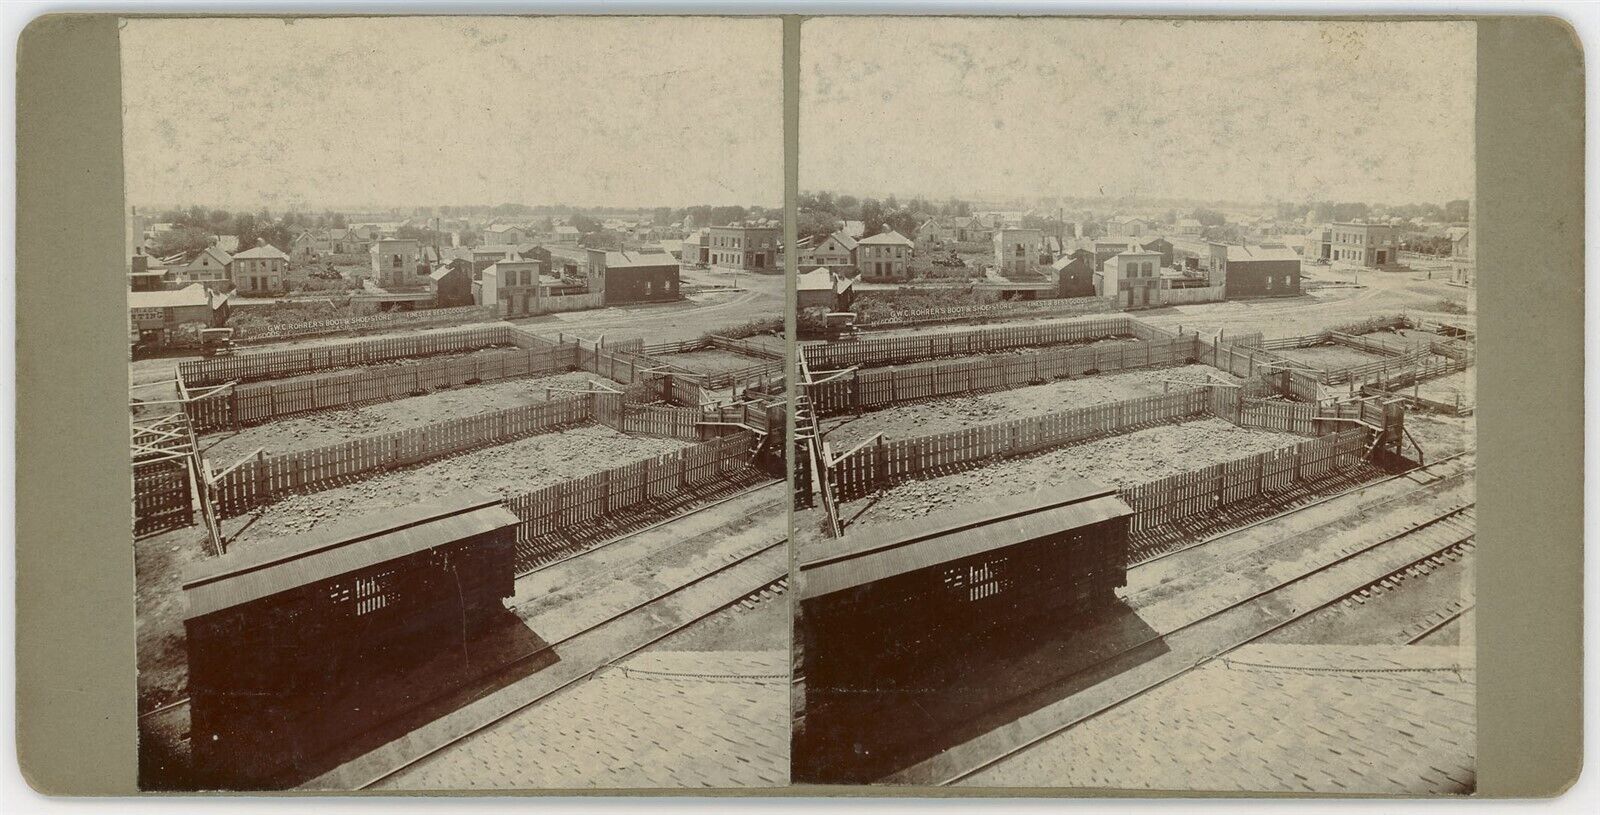 KANSAS SV - Abilene - Panorama & Railroad Yard - 1880s/90s VERY RARE